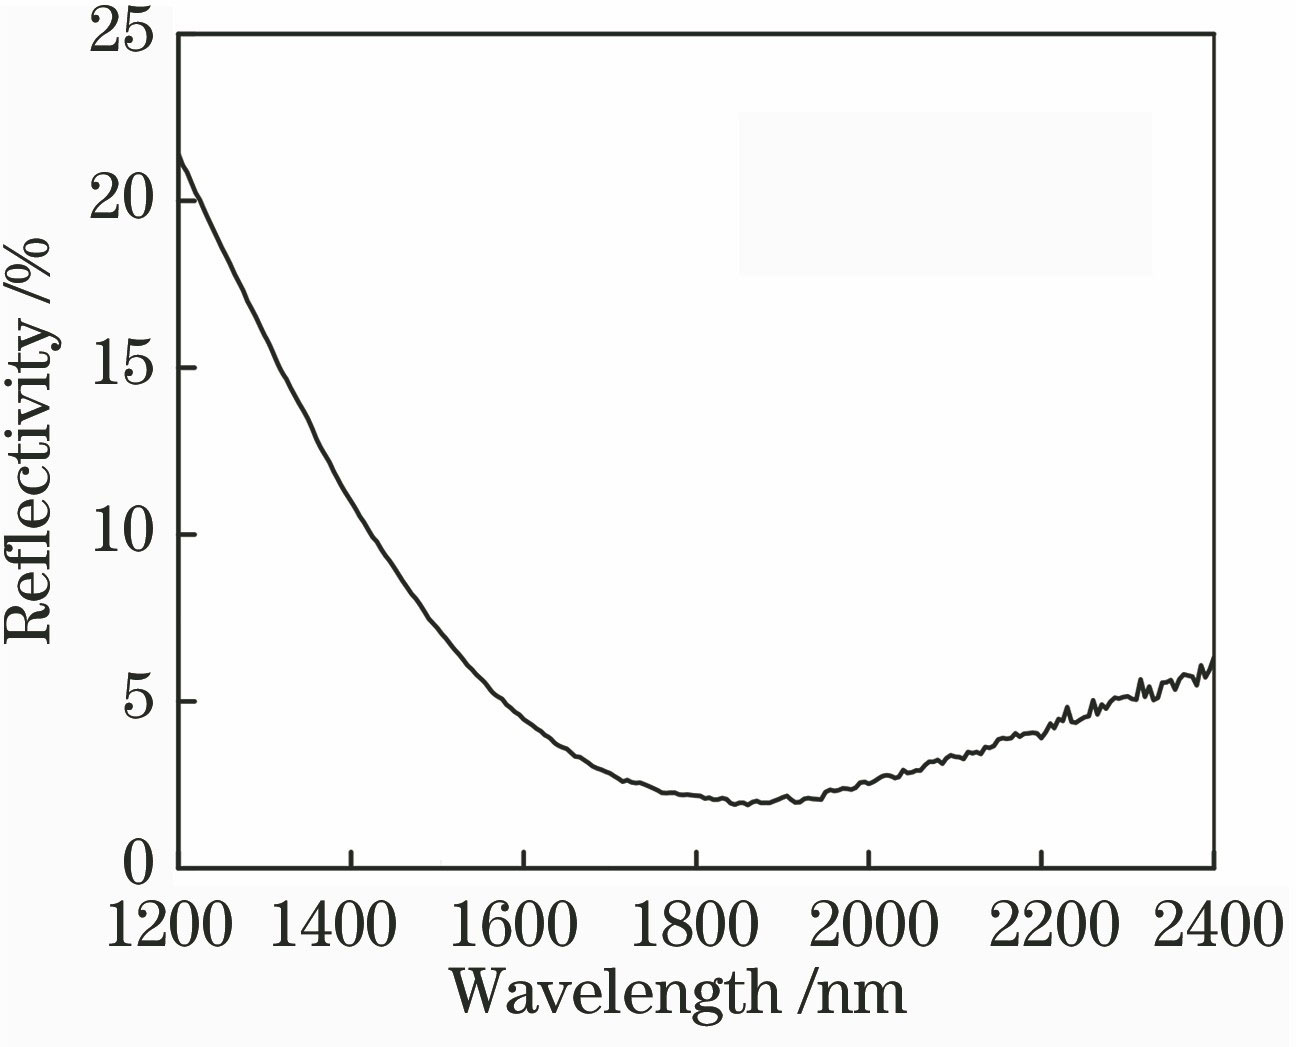 Reflectivity of antireflection film versus wavelength